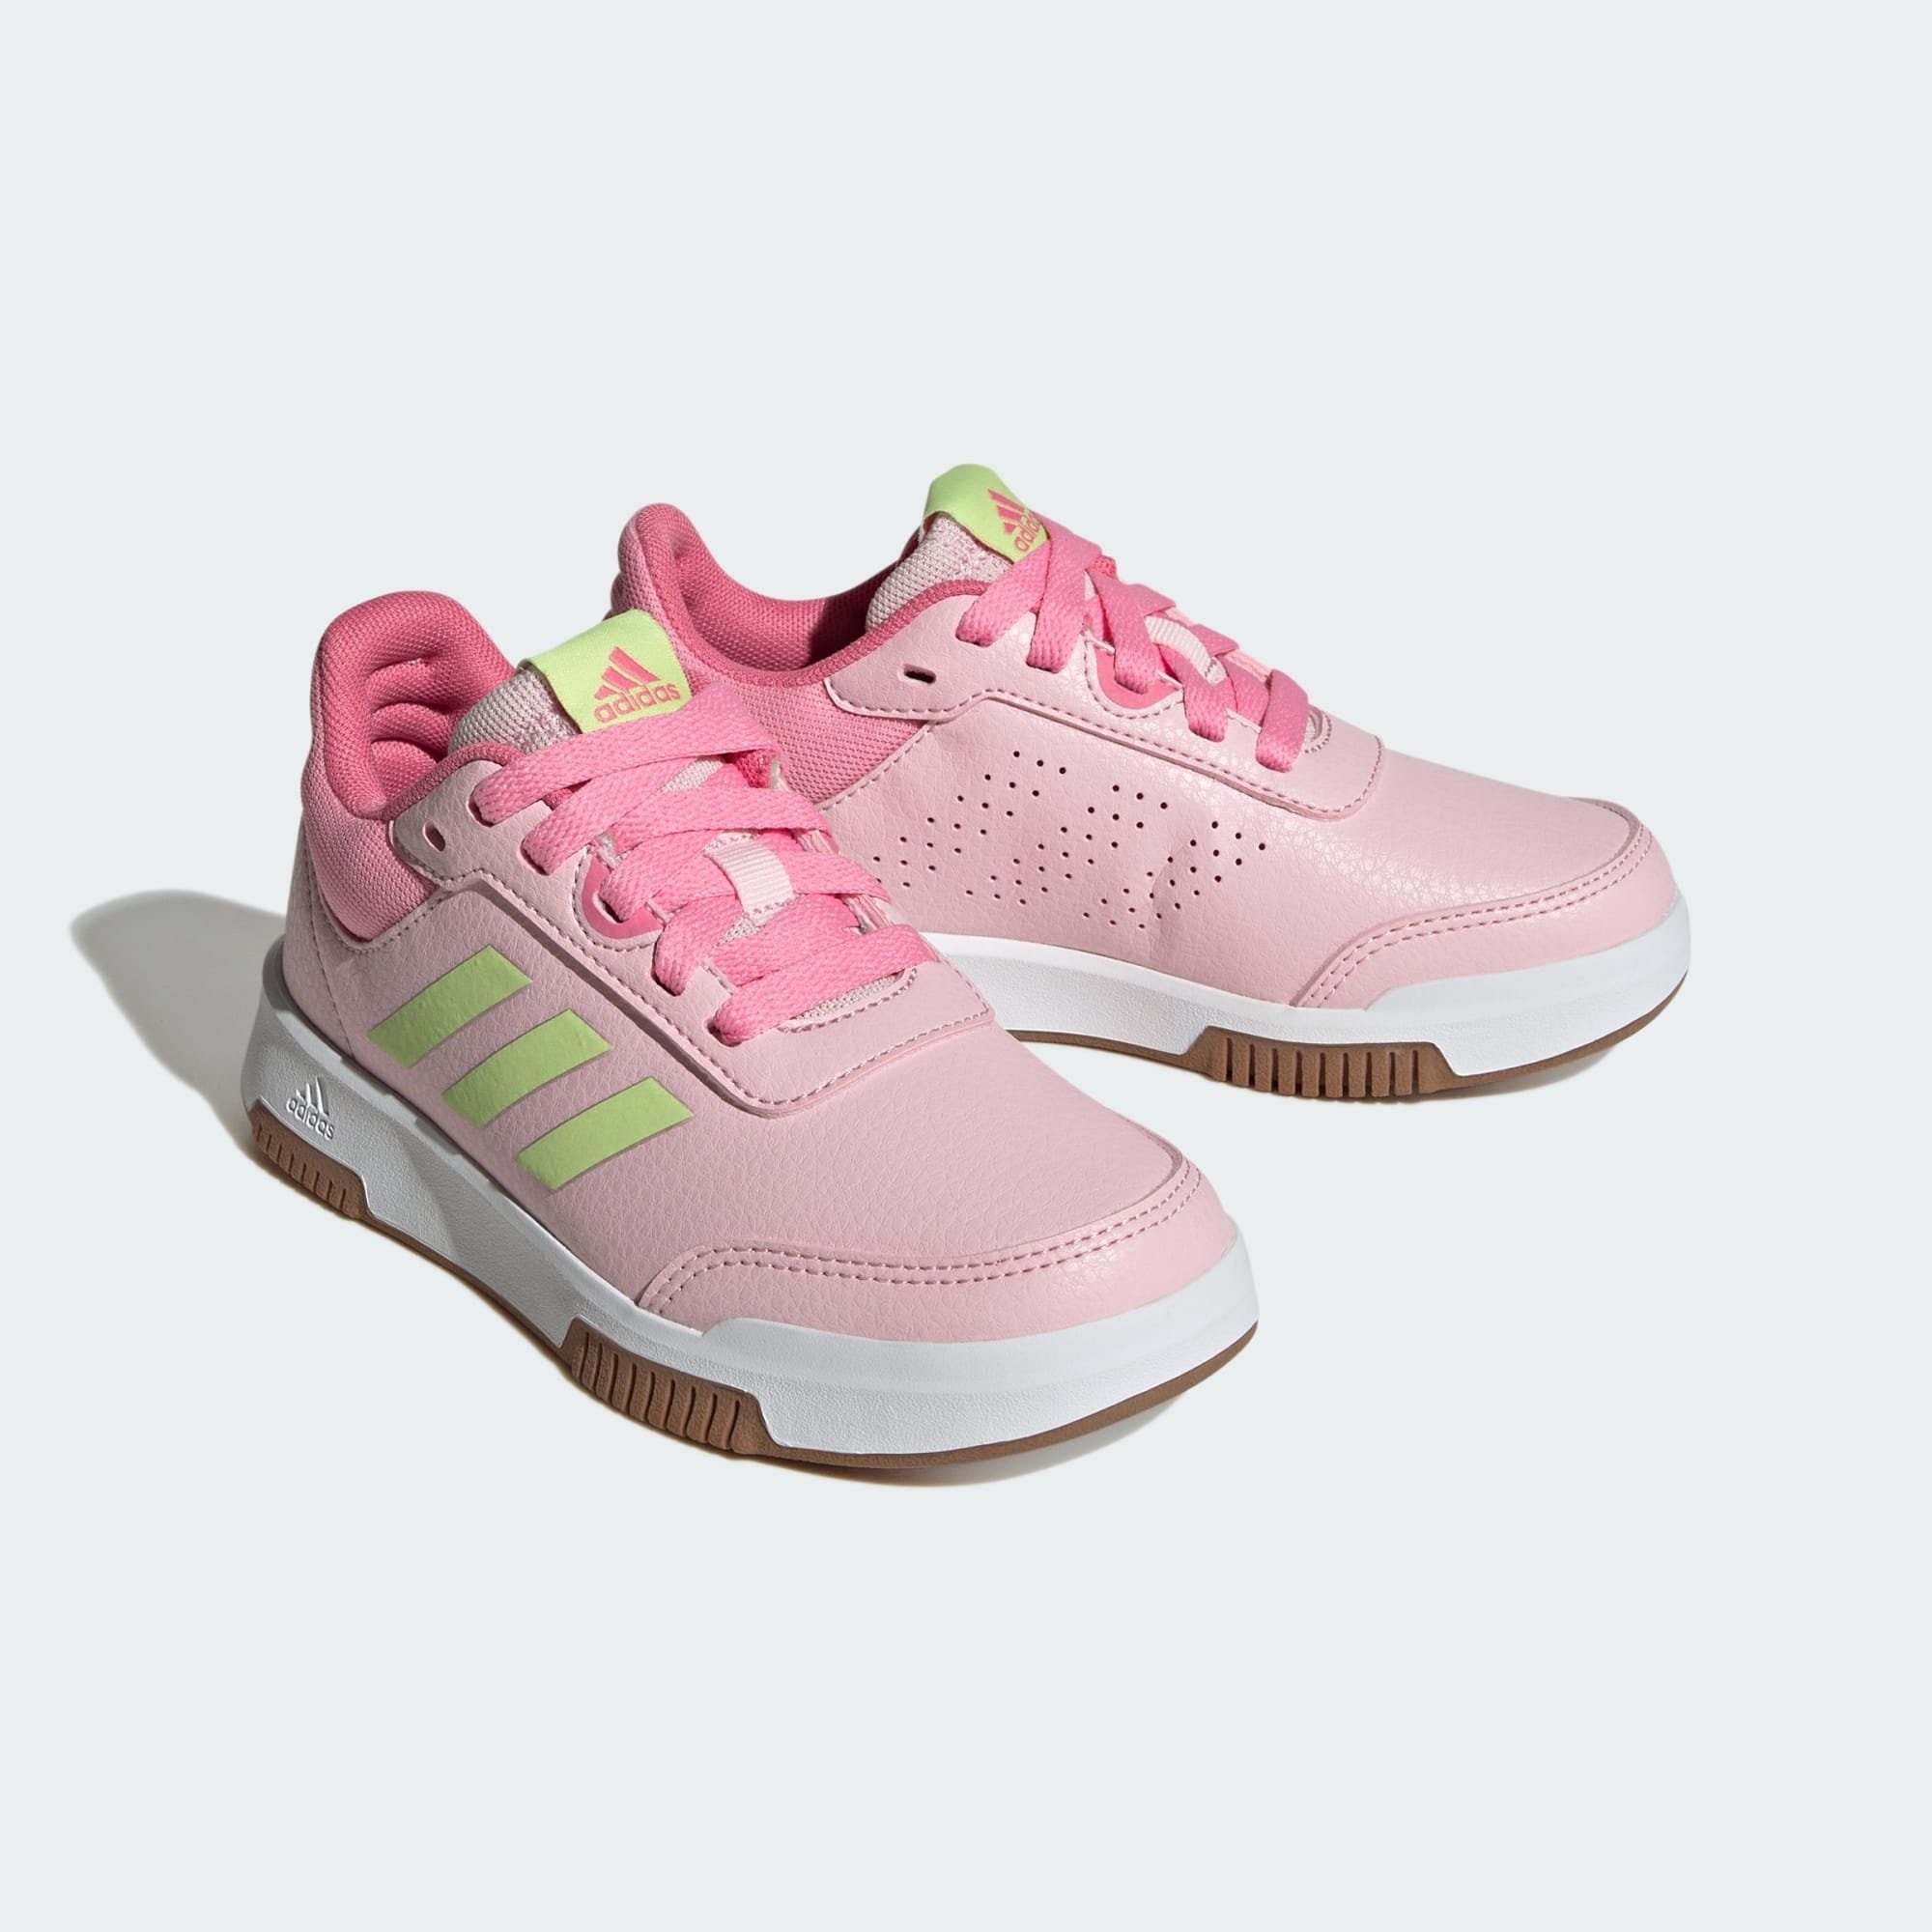 / Clear SCHUH TENSAUR Pulse Lime TRAINING Sportswear Bliss LACE / Pink SPORT adidas Pink Sneaker